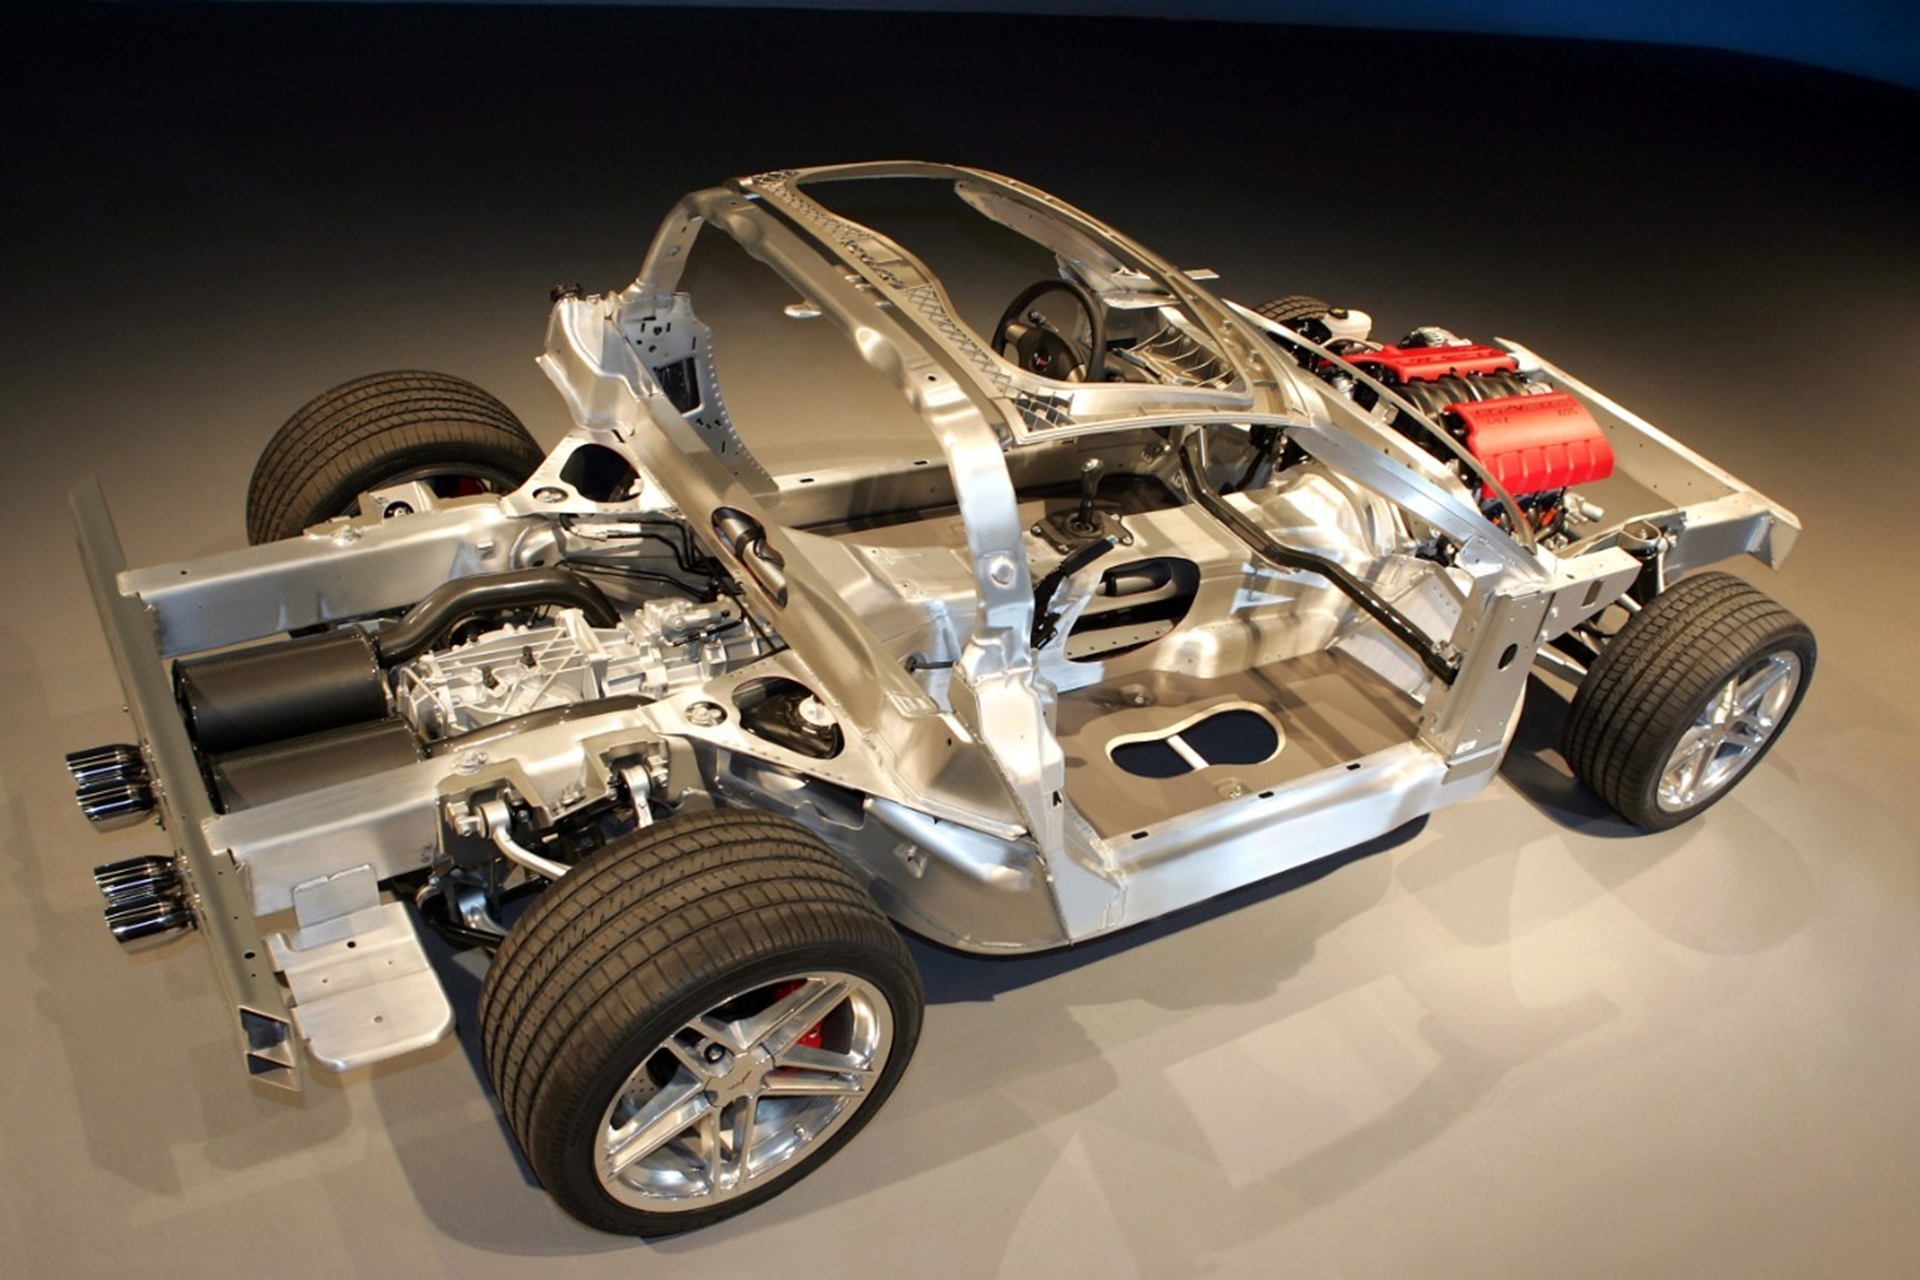 Fiberglass to Carbon Fiber: Corvette’s Lightweight Legacy